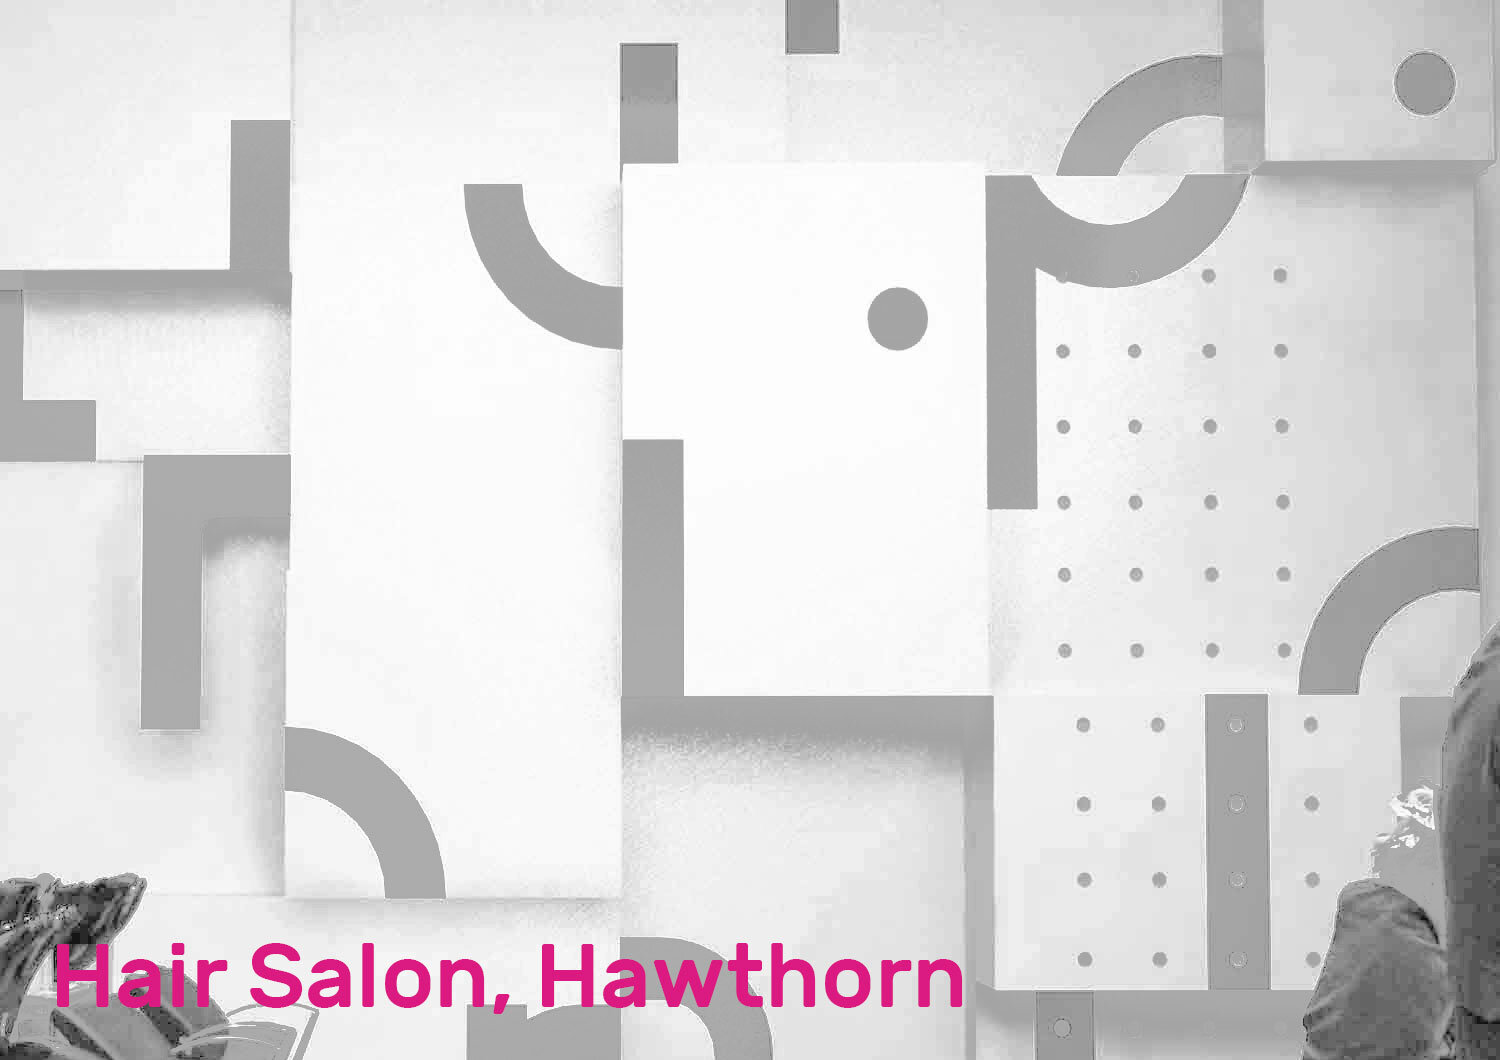 hawthorn-hair-salon-by-warc-studio-architects-03.jpg